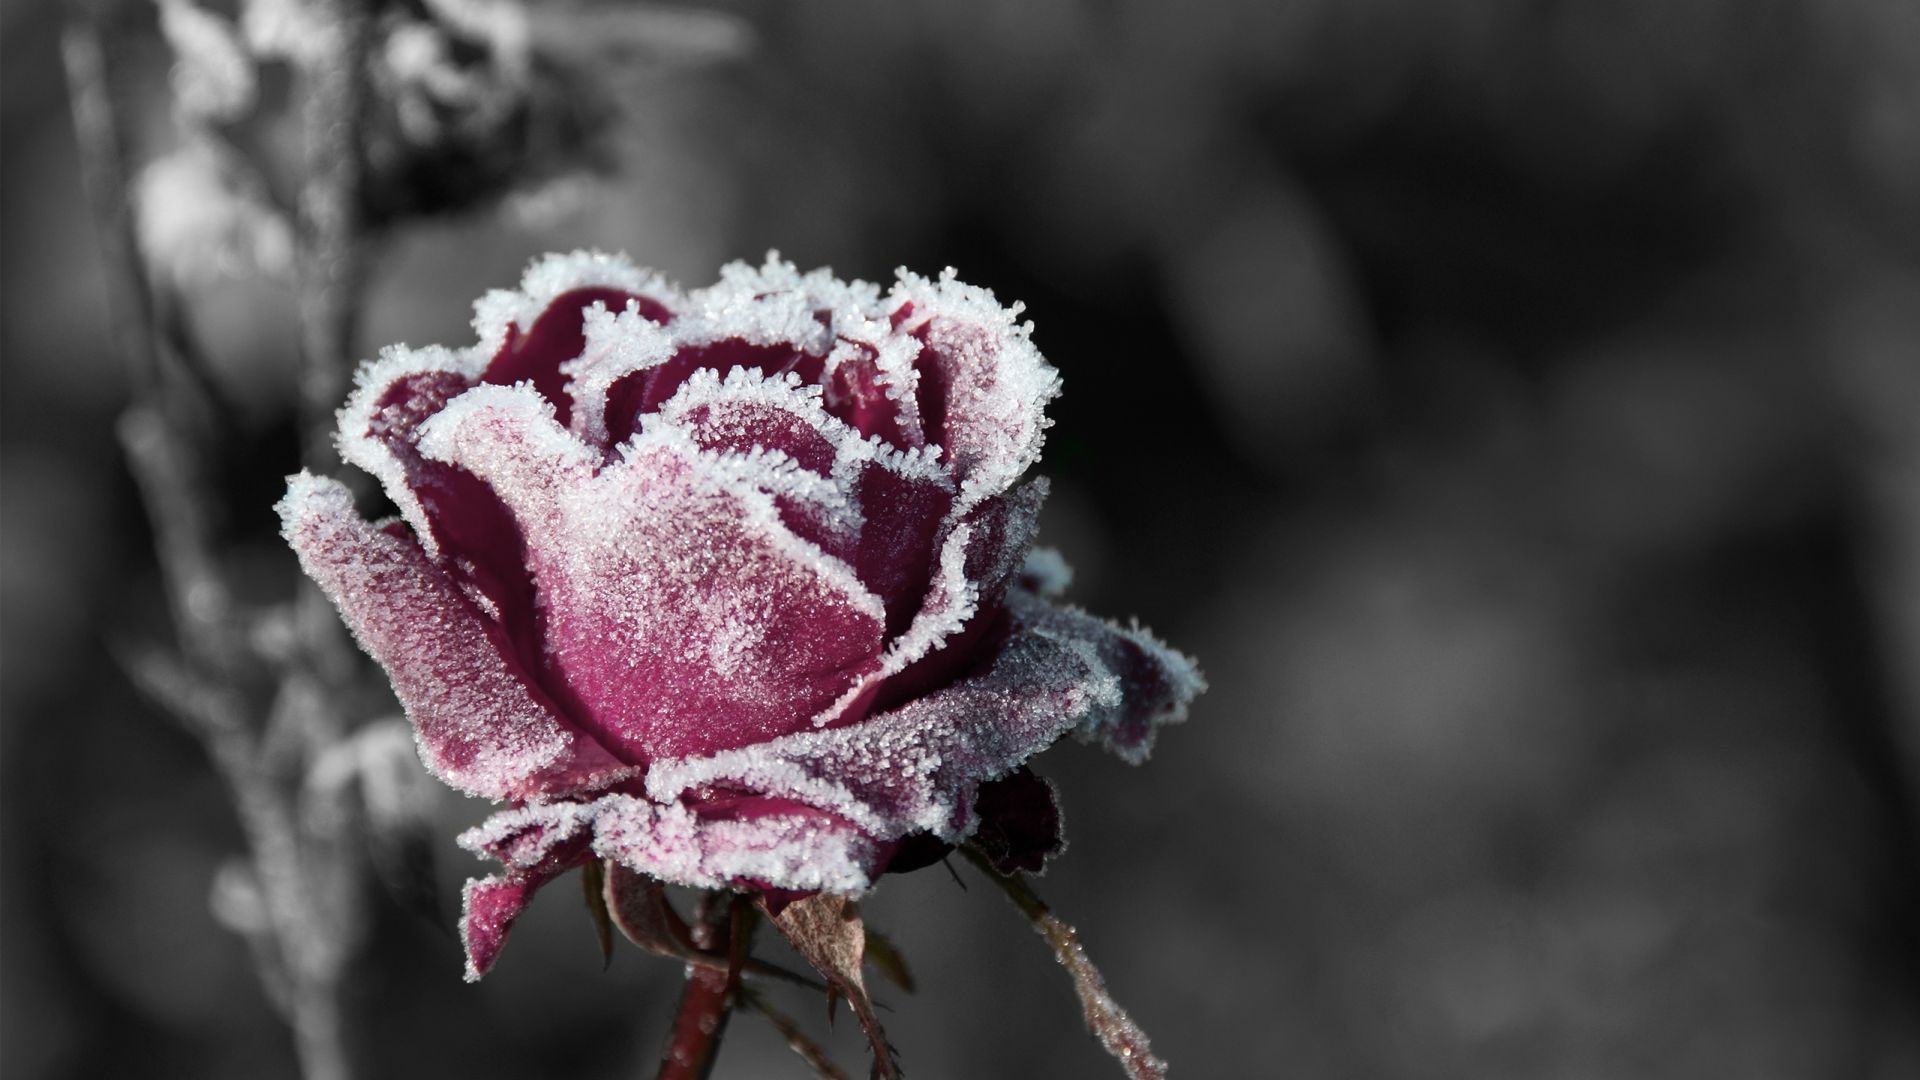 Desktop Wallpaper Snow Frost On Rose Flower, Hd Image, Picture, Background,  Tg 3ta